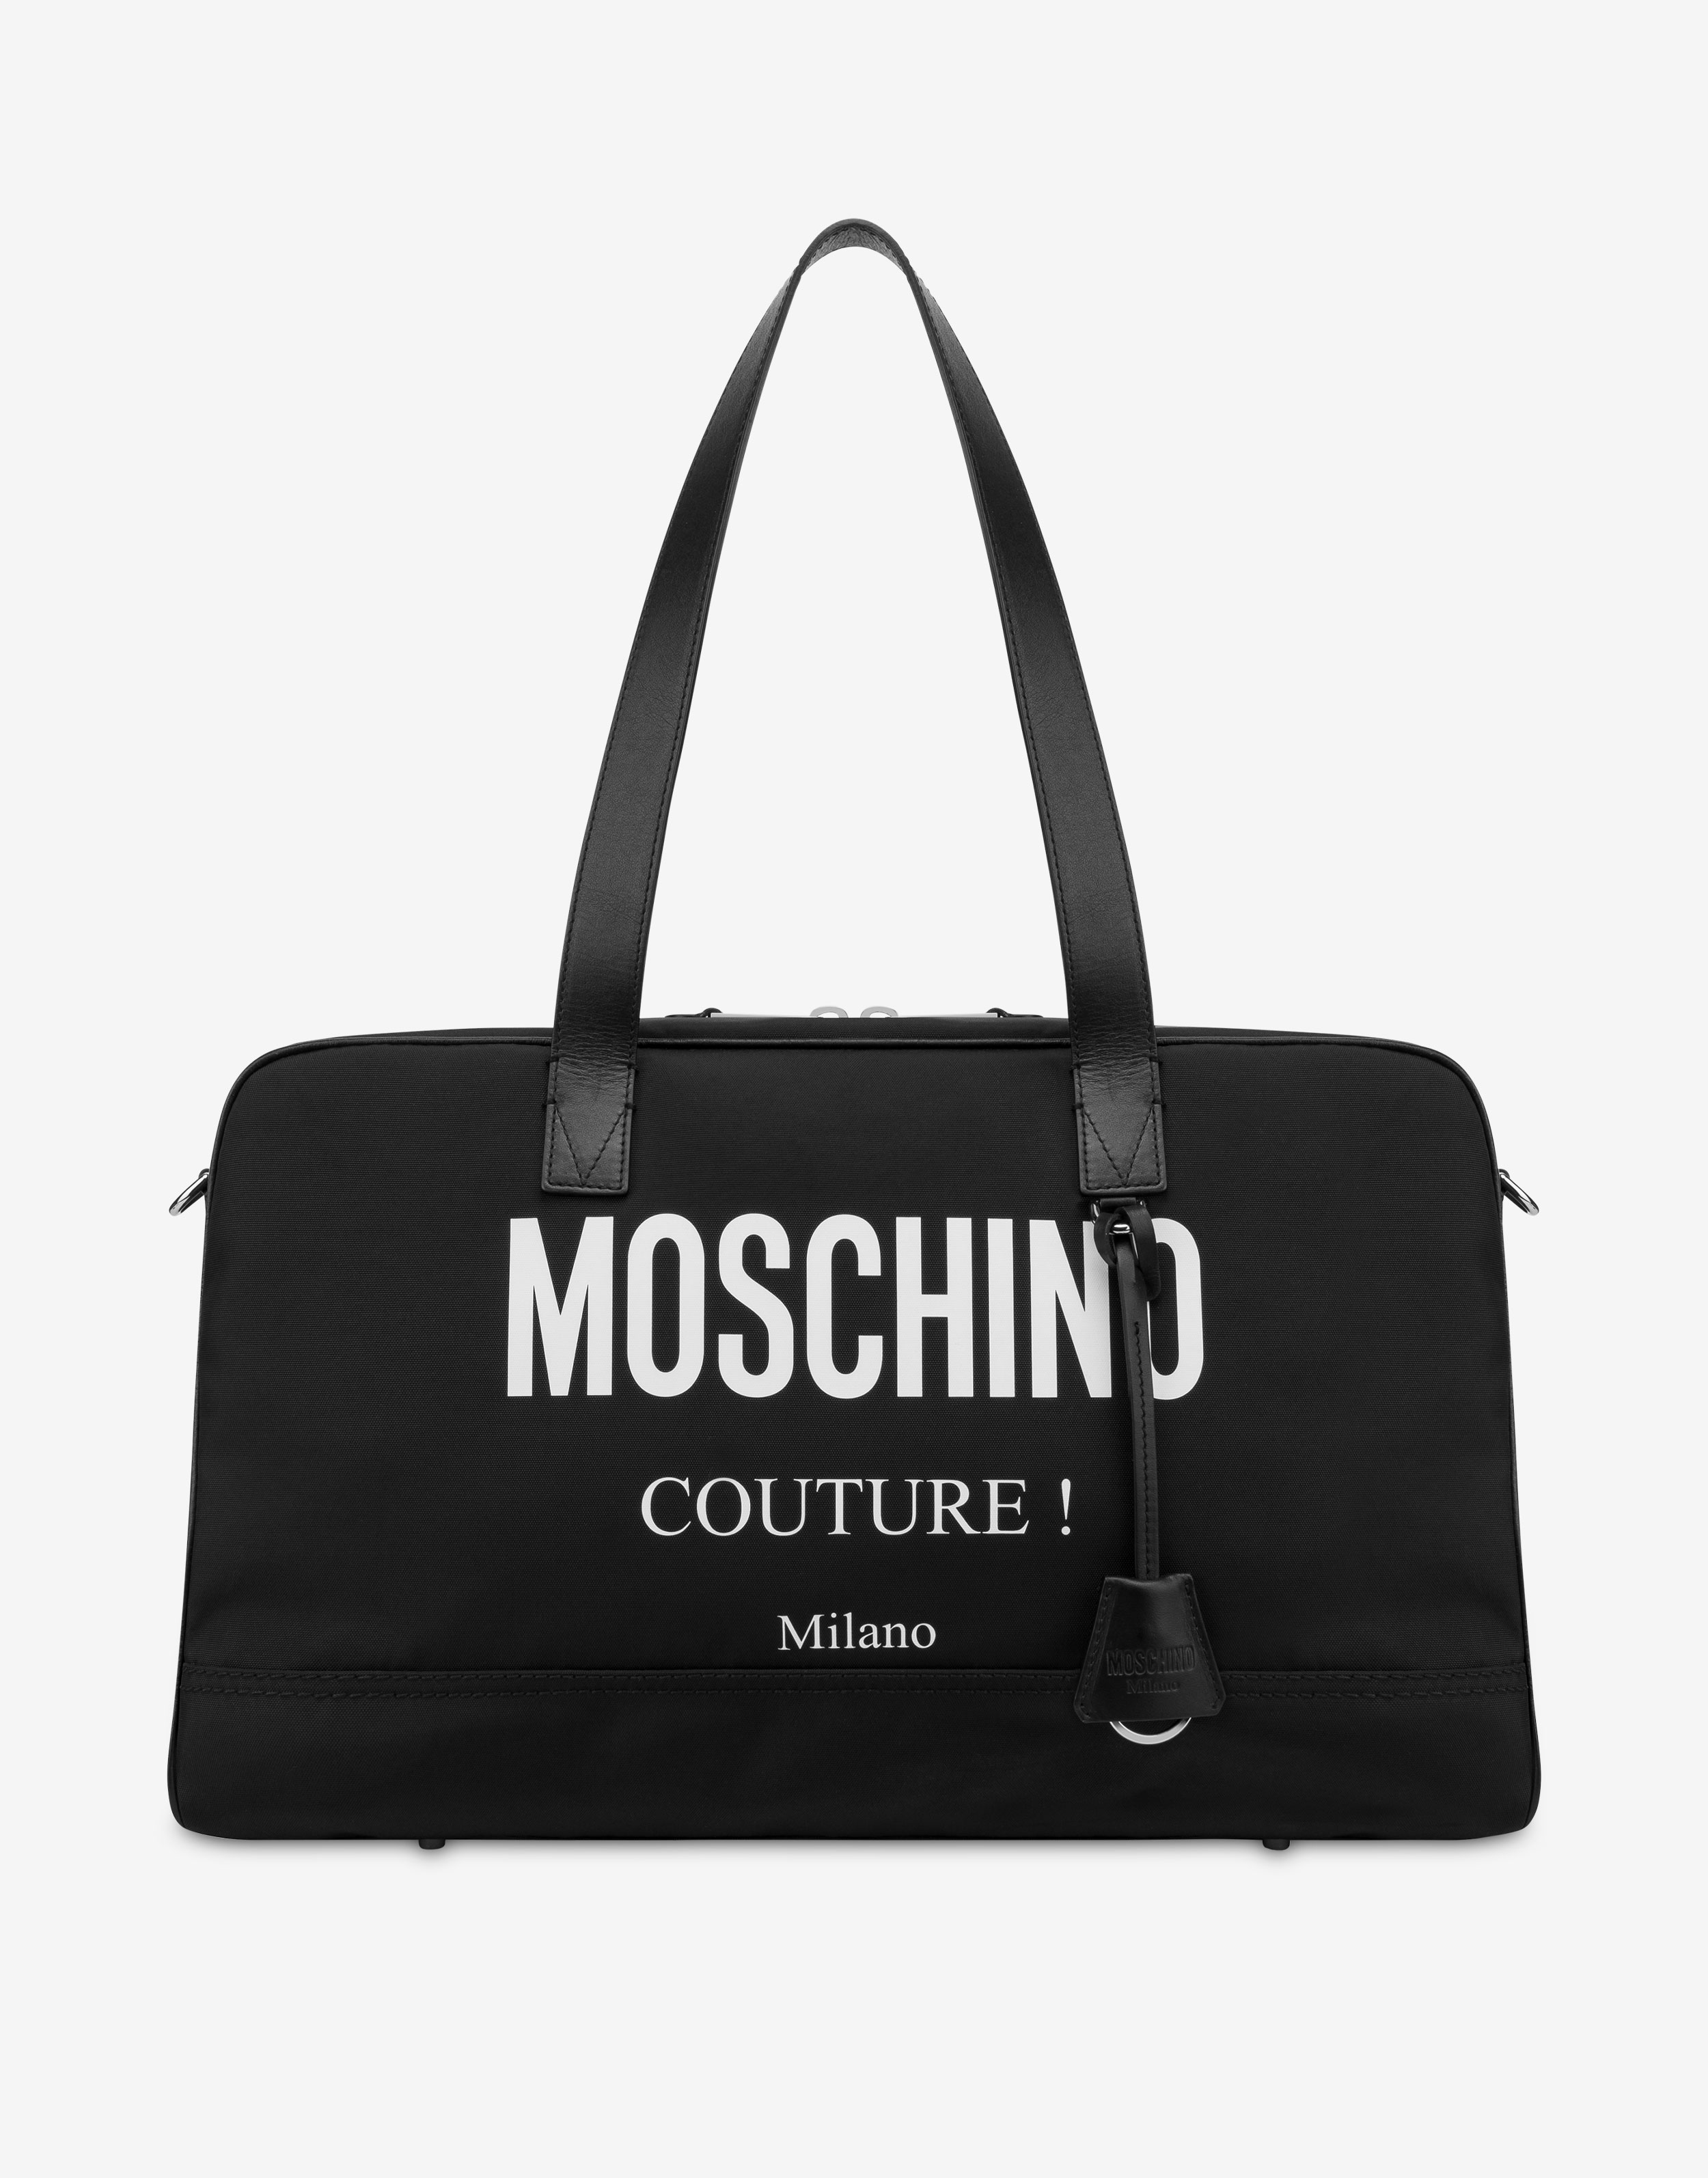 MOSCHINO bag